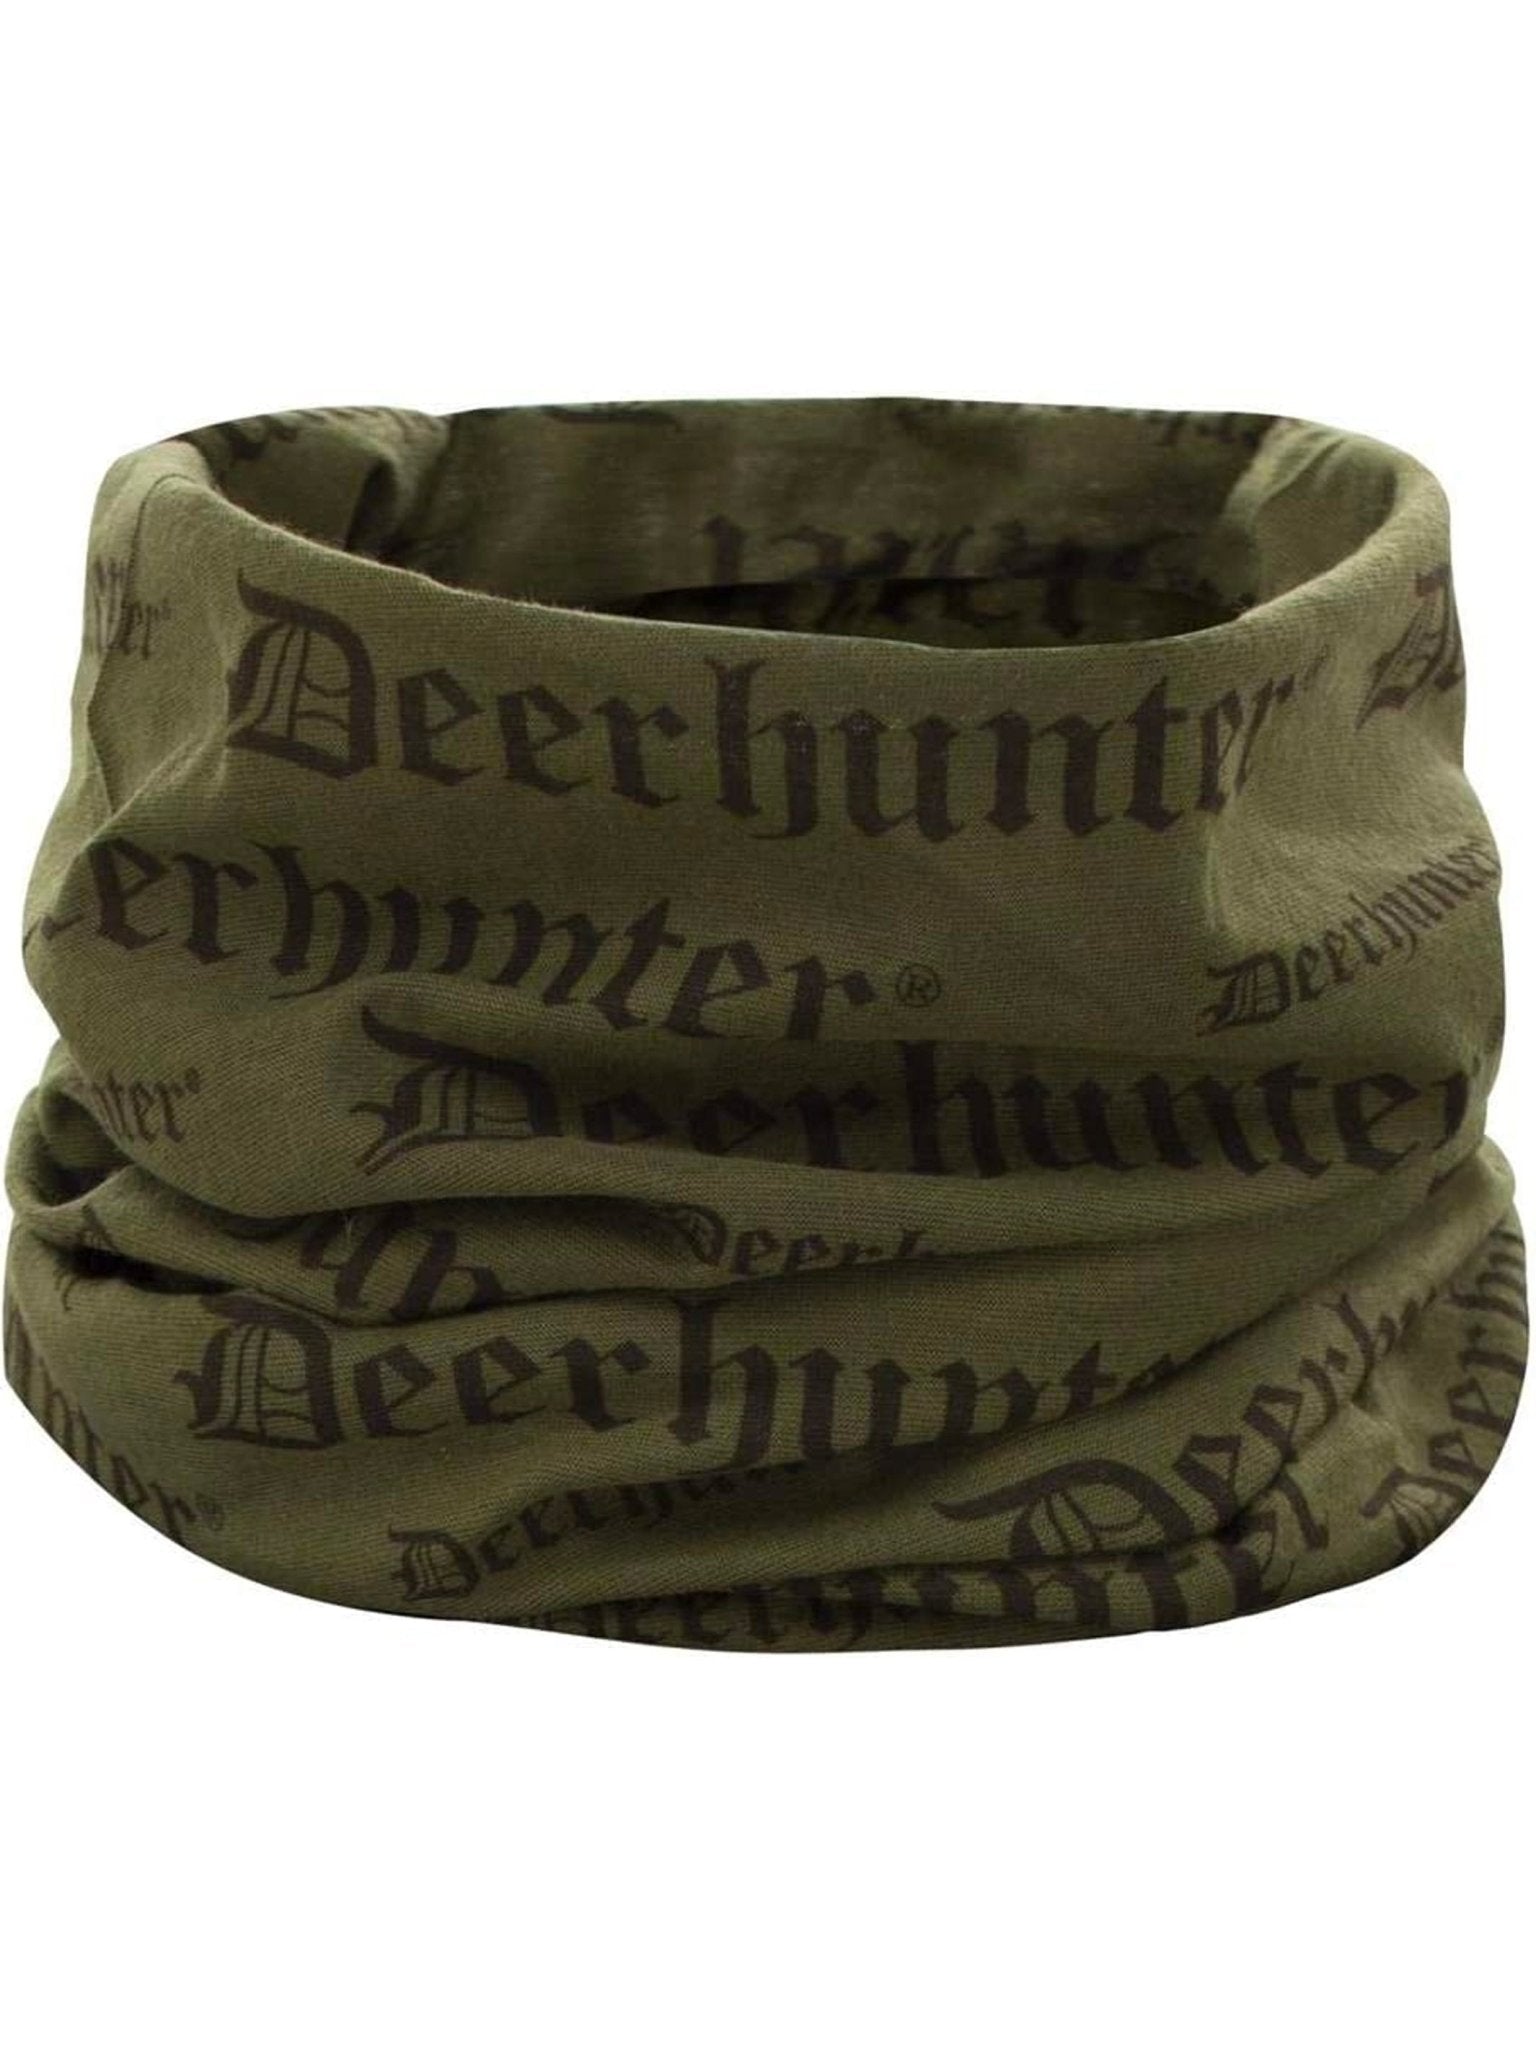 4elementsclothingDeerhunterDeerhunter - Neck Tube - necktube, scarf, multiuse headband, hatHats6788-379